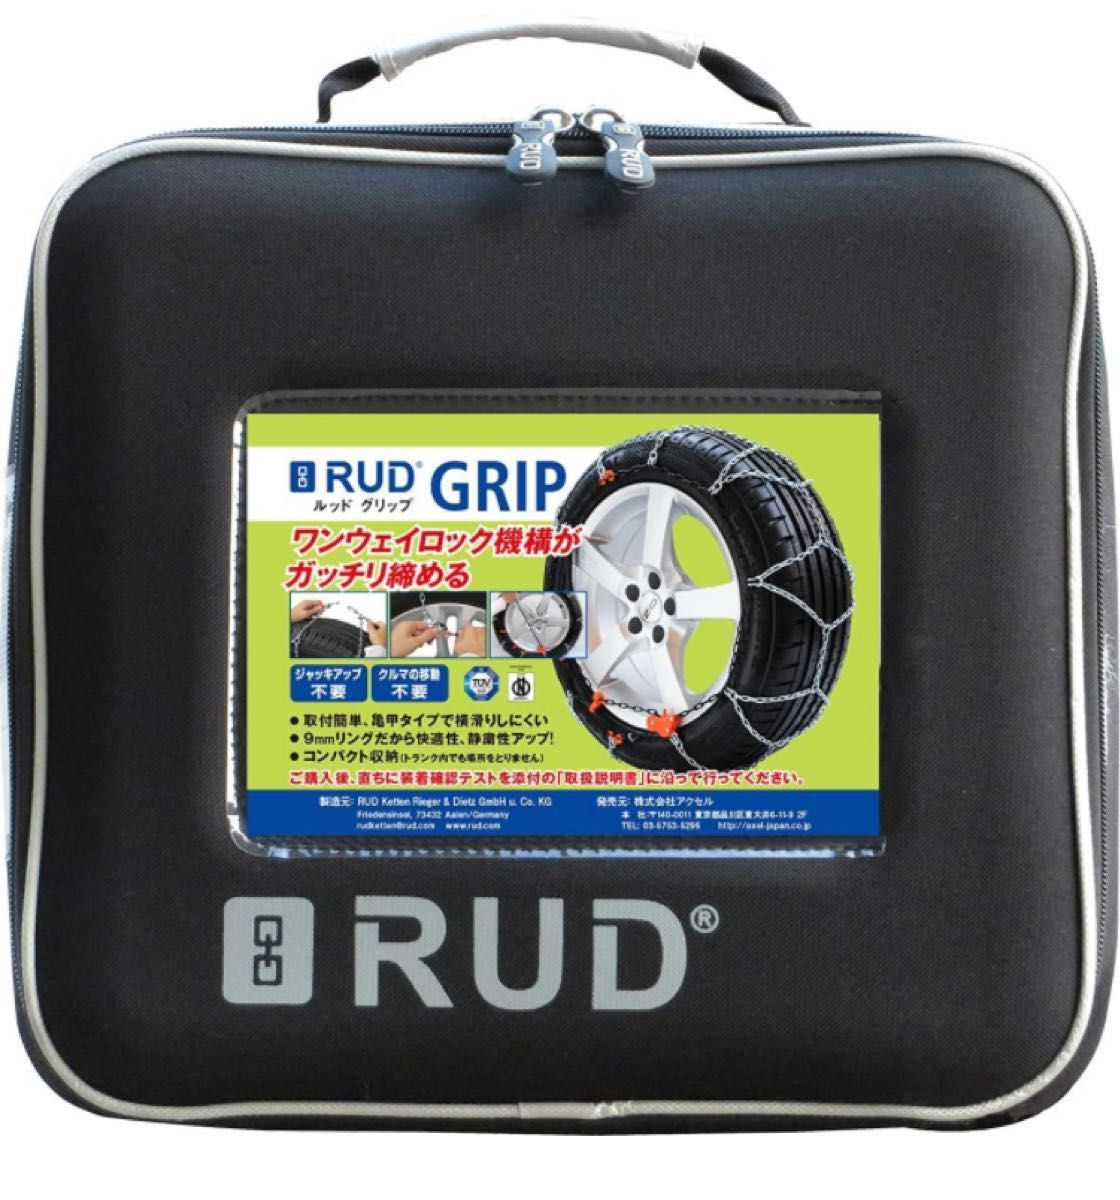 RUD(ルッド) GRIP(グリップ) 乗用車用高性能金属製スノーチェーン 【6】